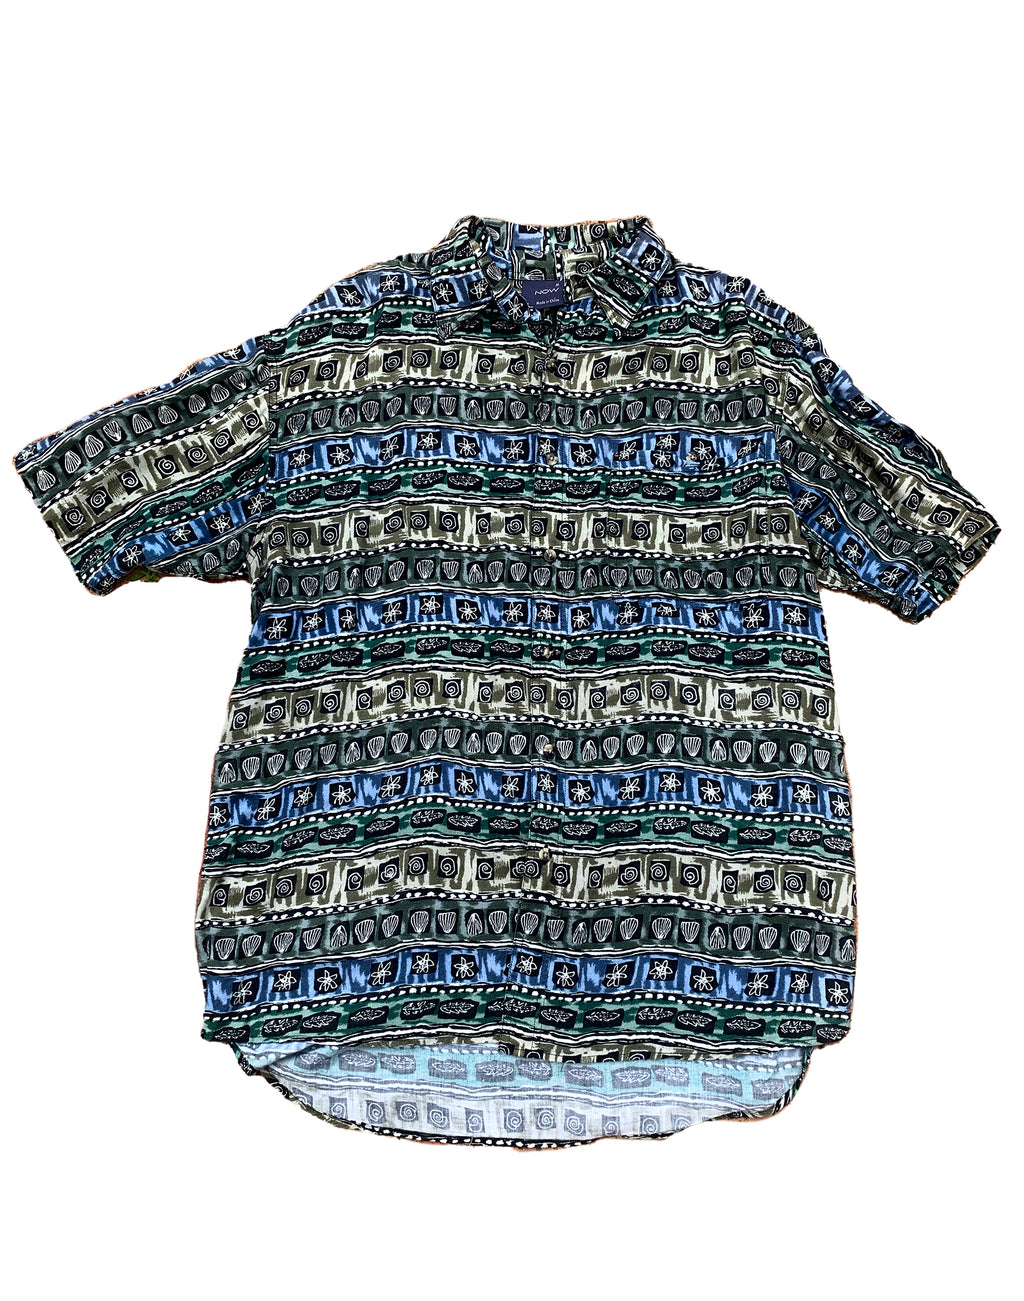 Vintage 90's Green Grey Blue Retro Print Unisex Shirt - Size M